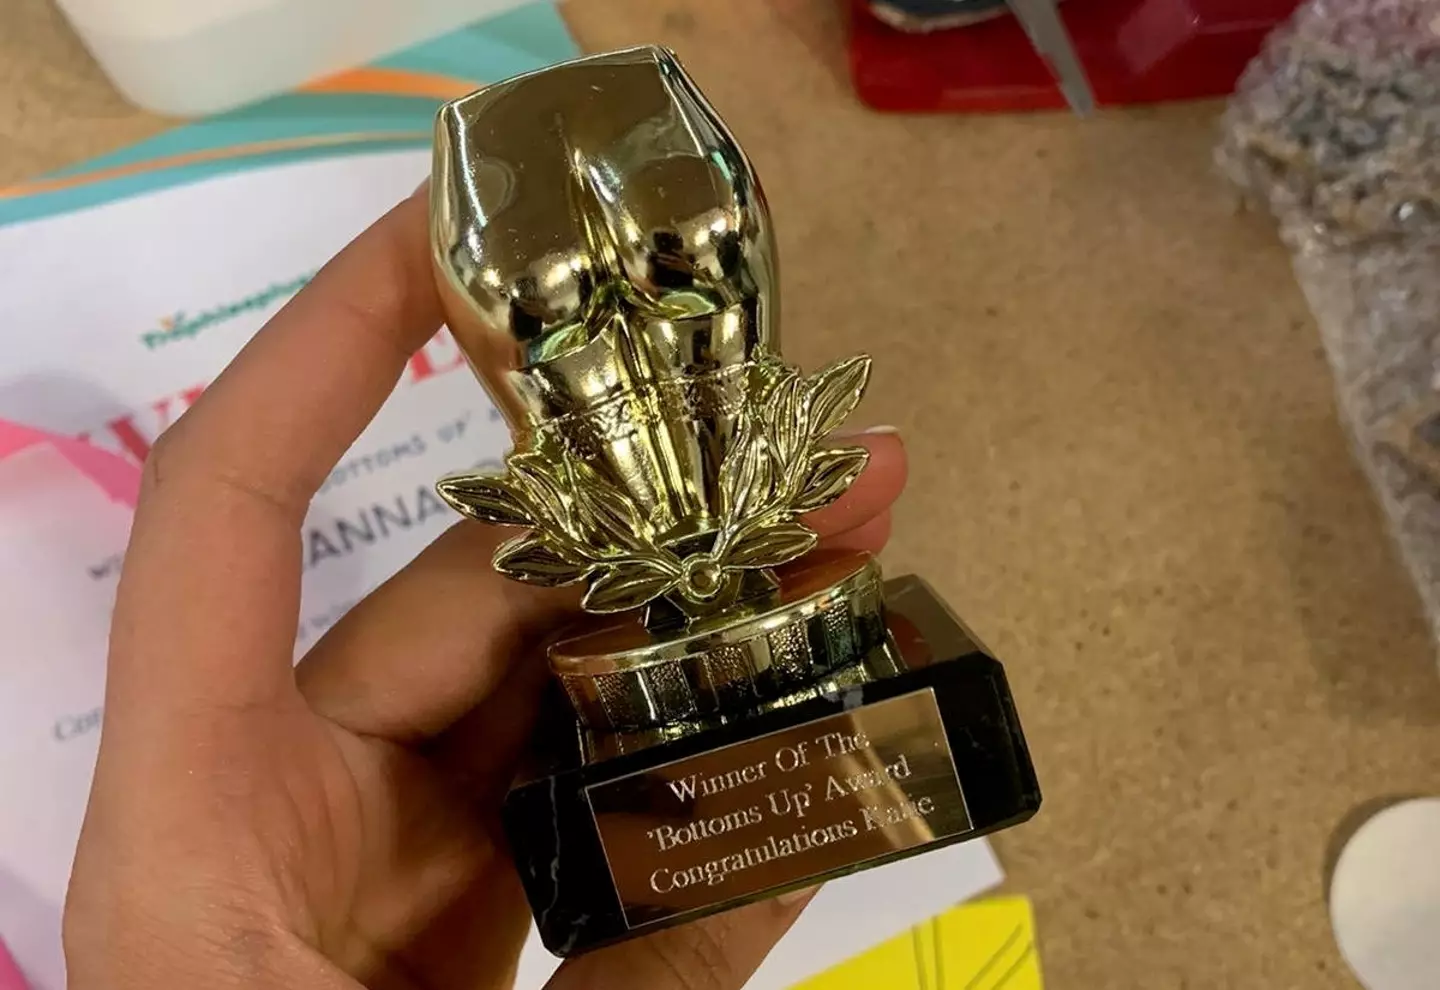 The trophy is shaped like Katie’s bottom.